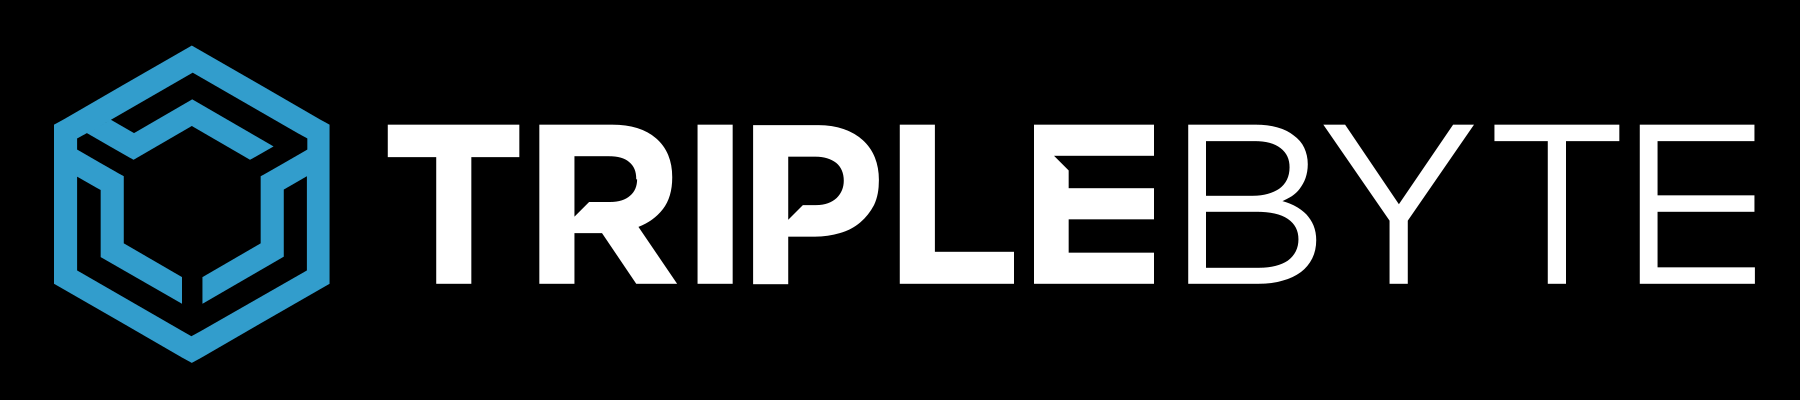 Triplebyte_Logo_on_Black_1800x400-2